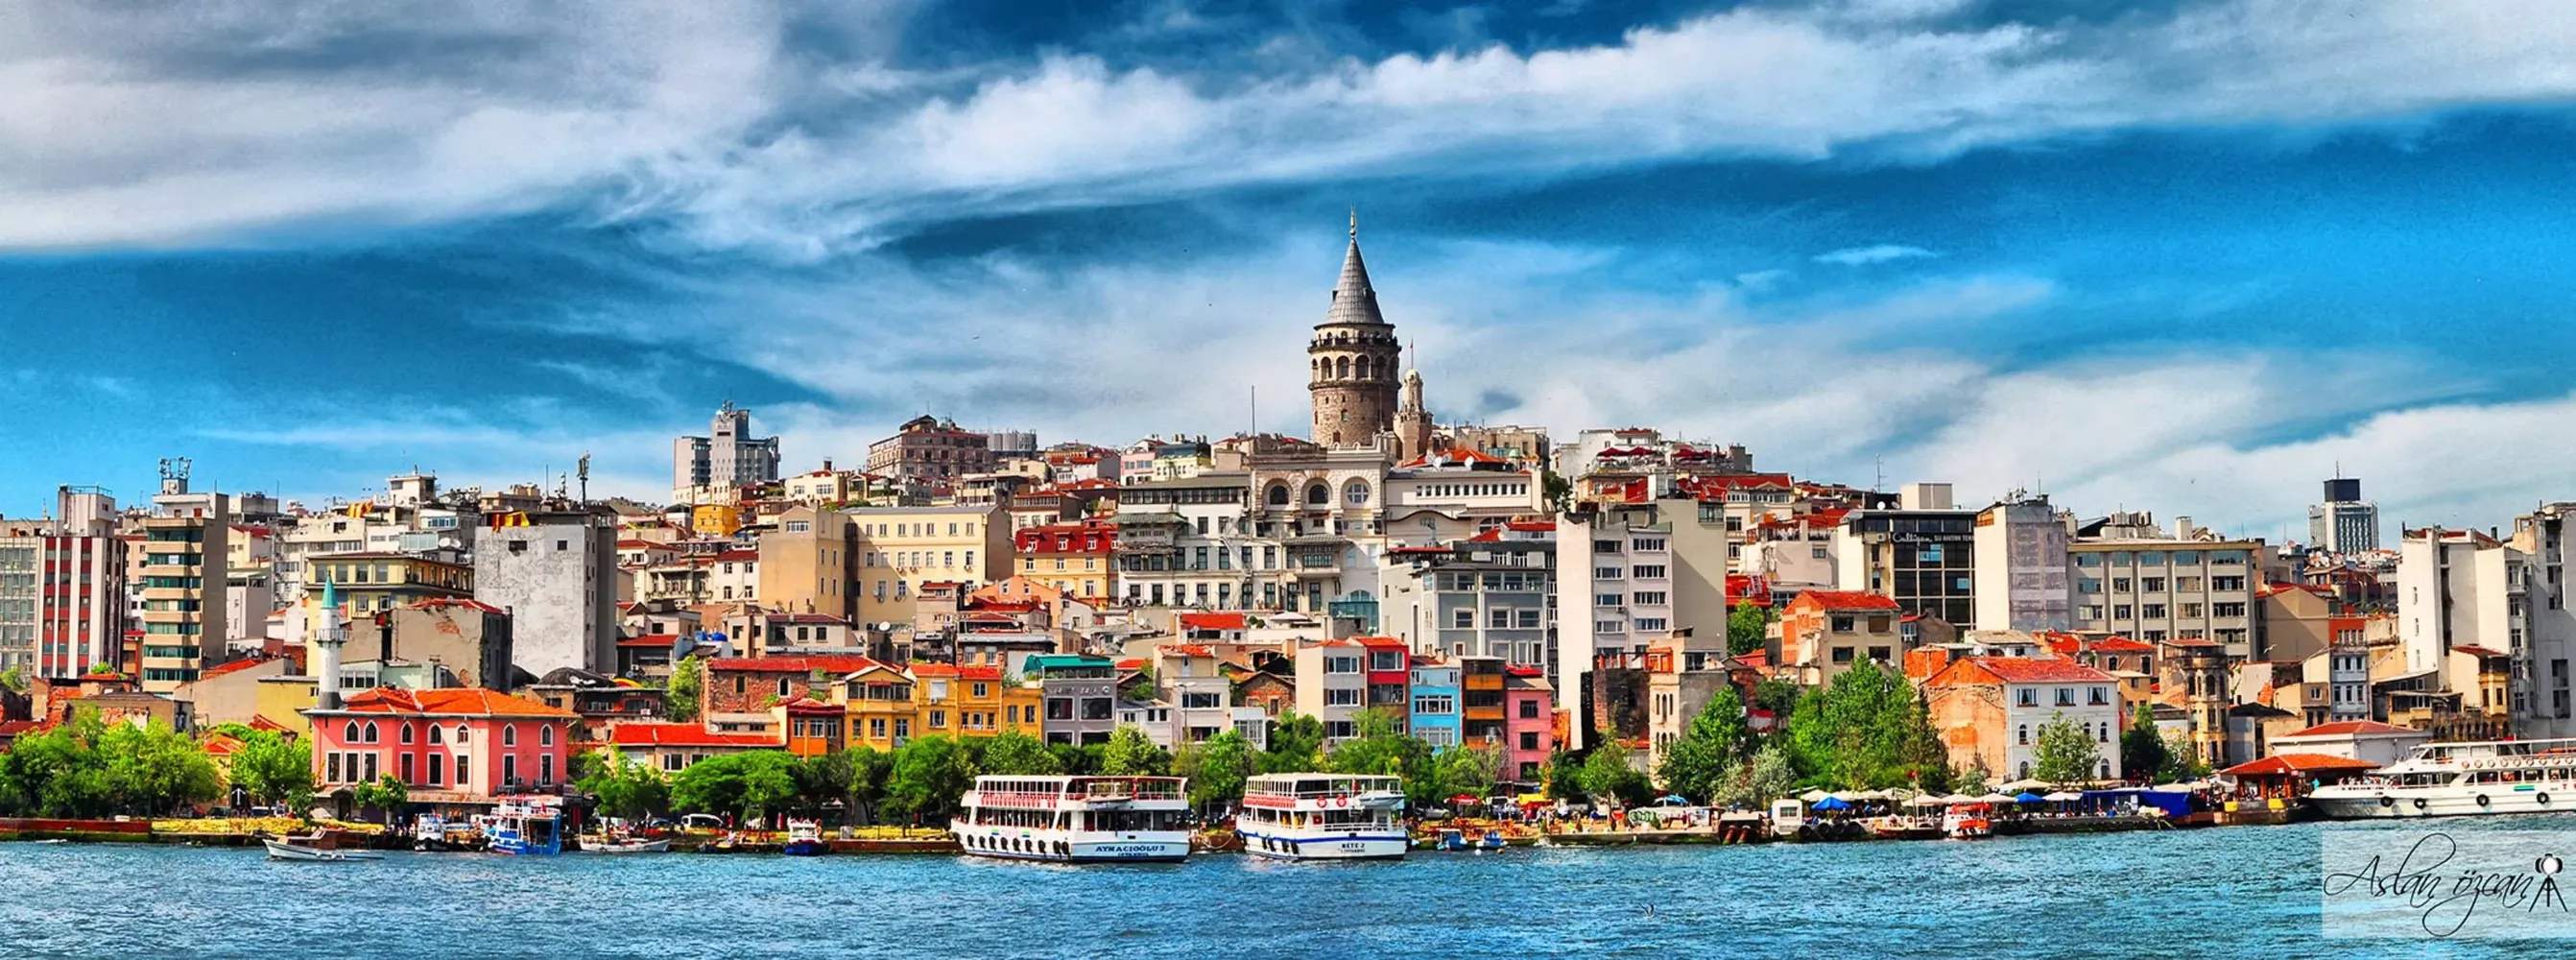 Istanbul | Marmara Region, Turkey - Rated 8